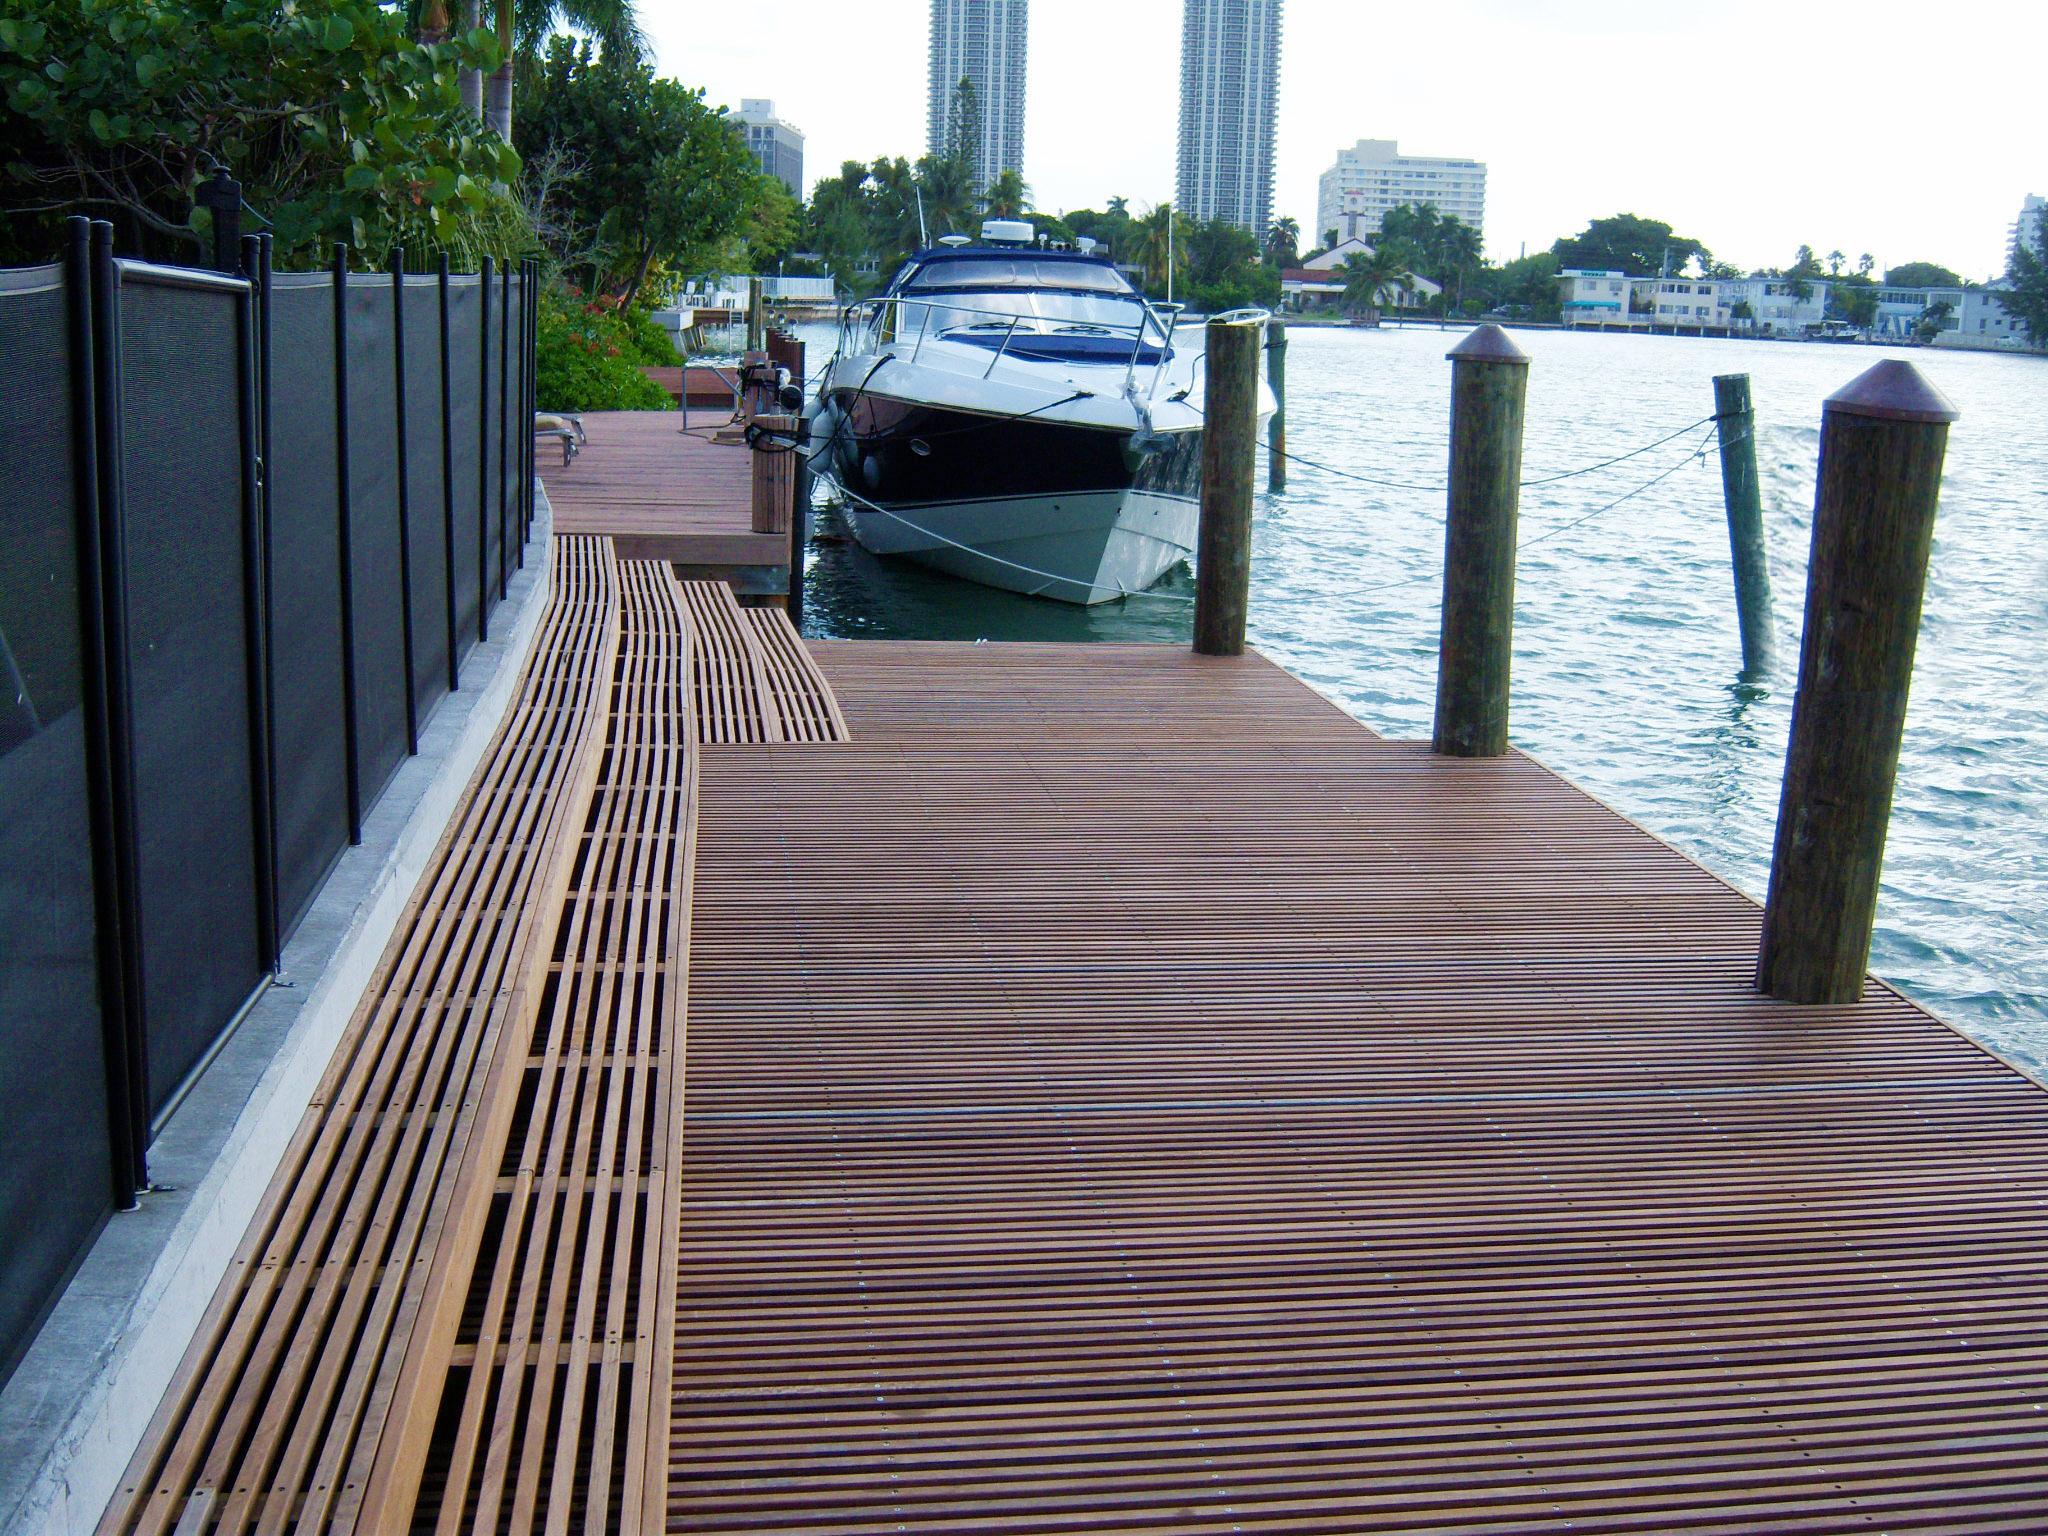 Stunning Ipe grating dock - Dock &amp; Marine Construction